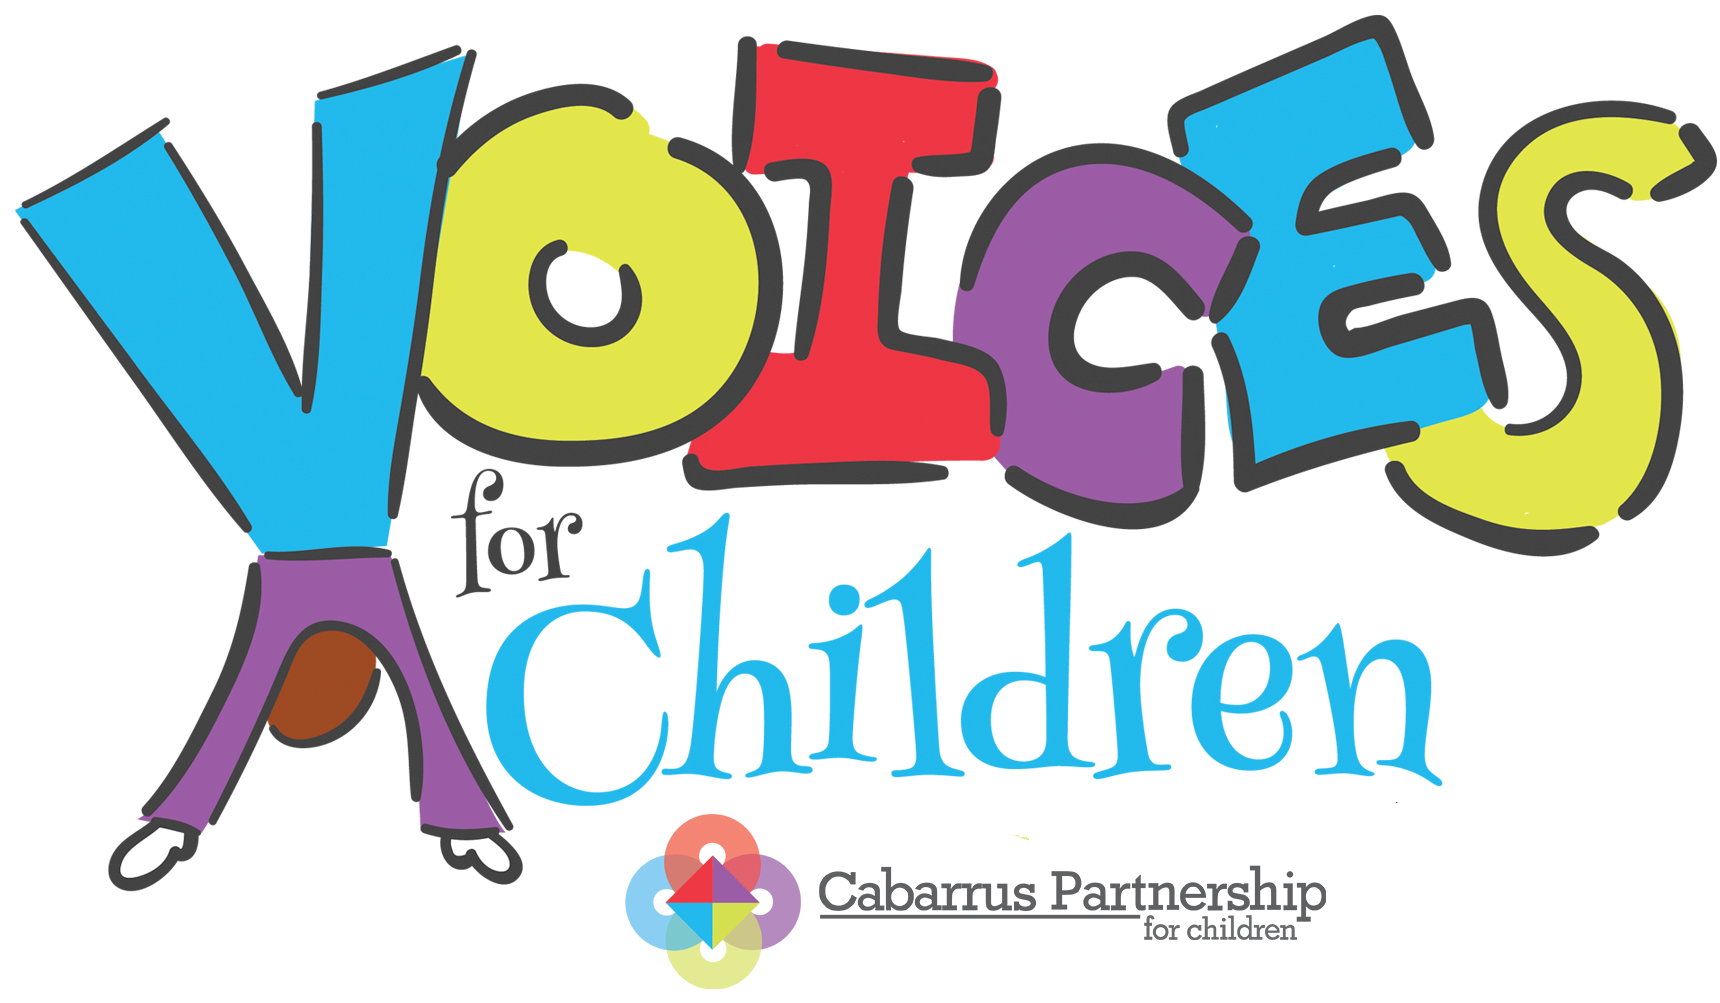 Cabarrus Partnership for Children